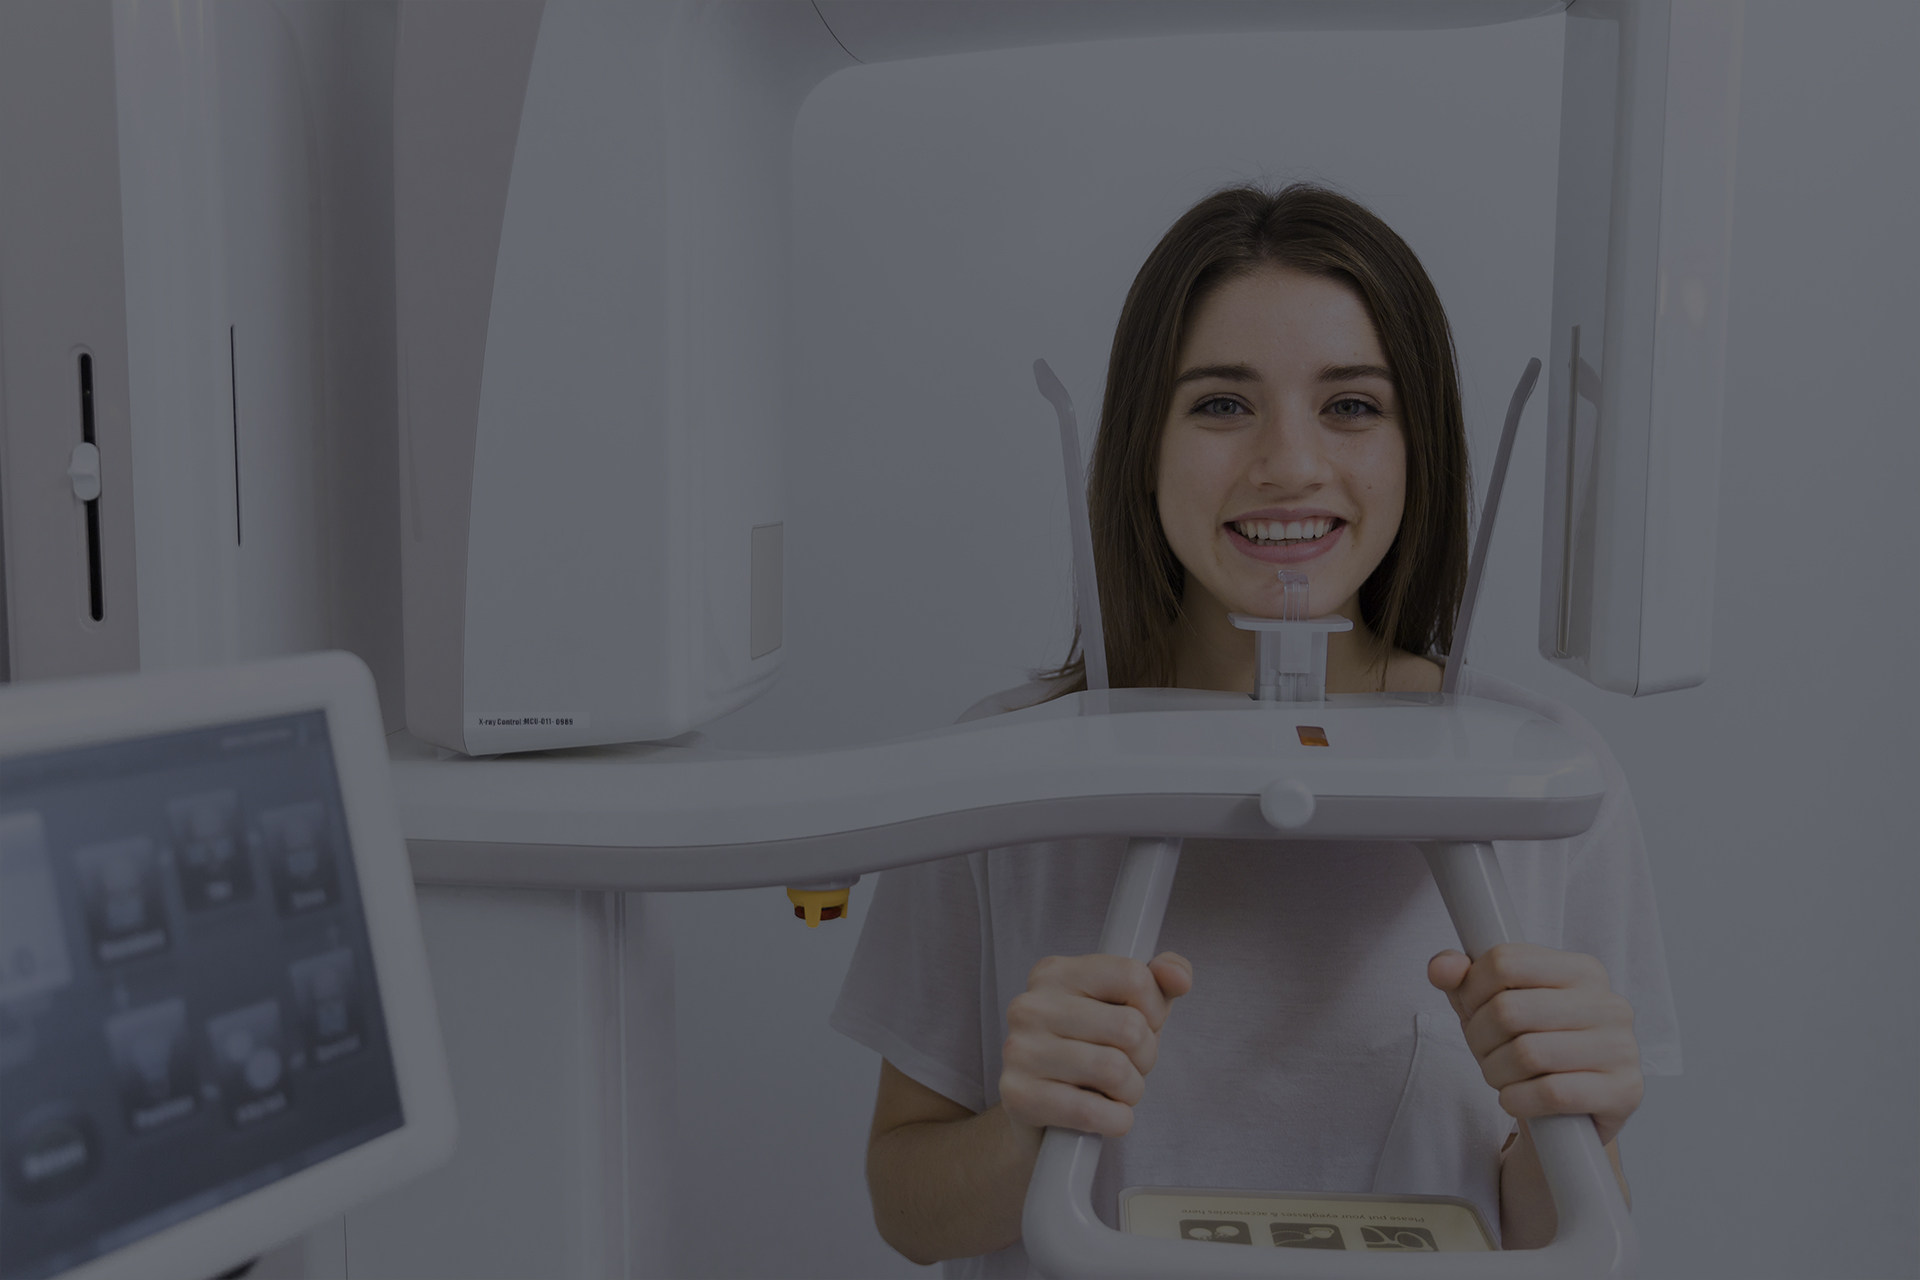 radiografia dental